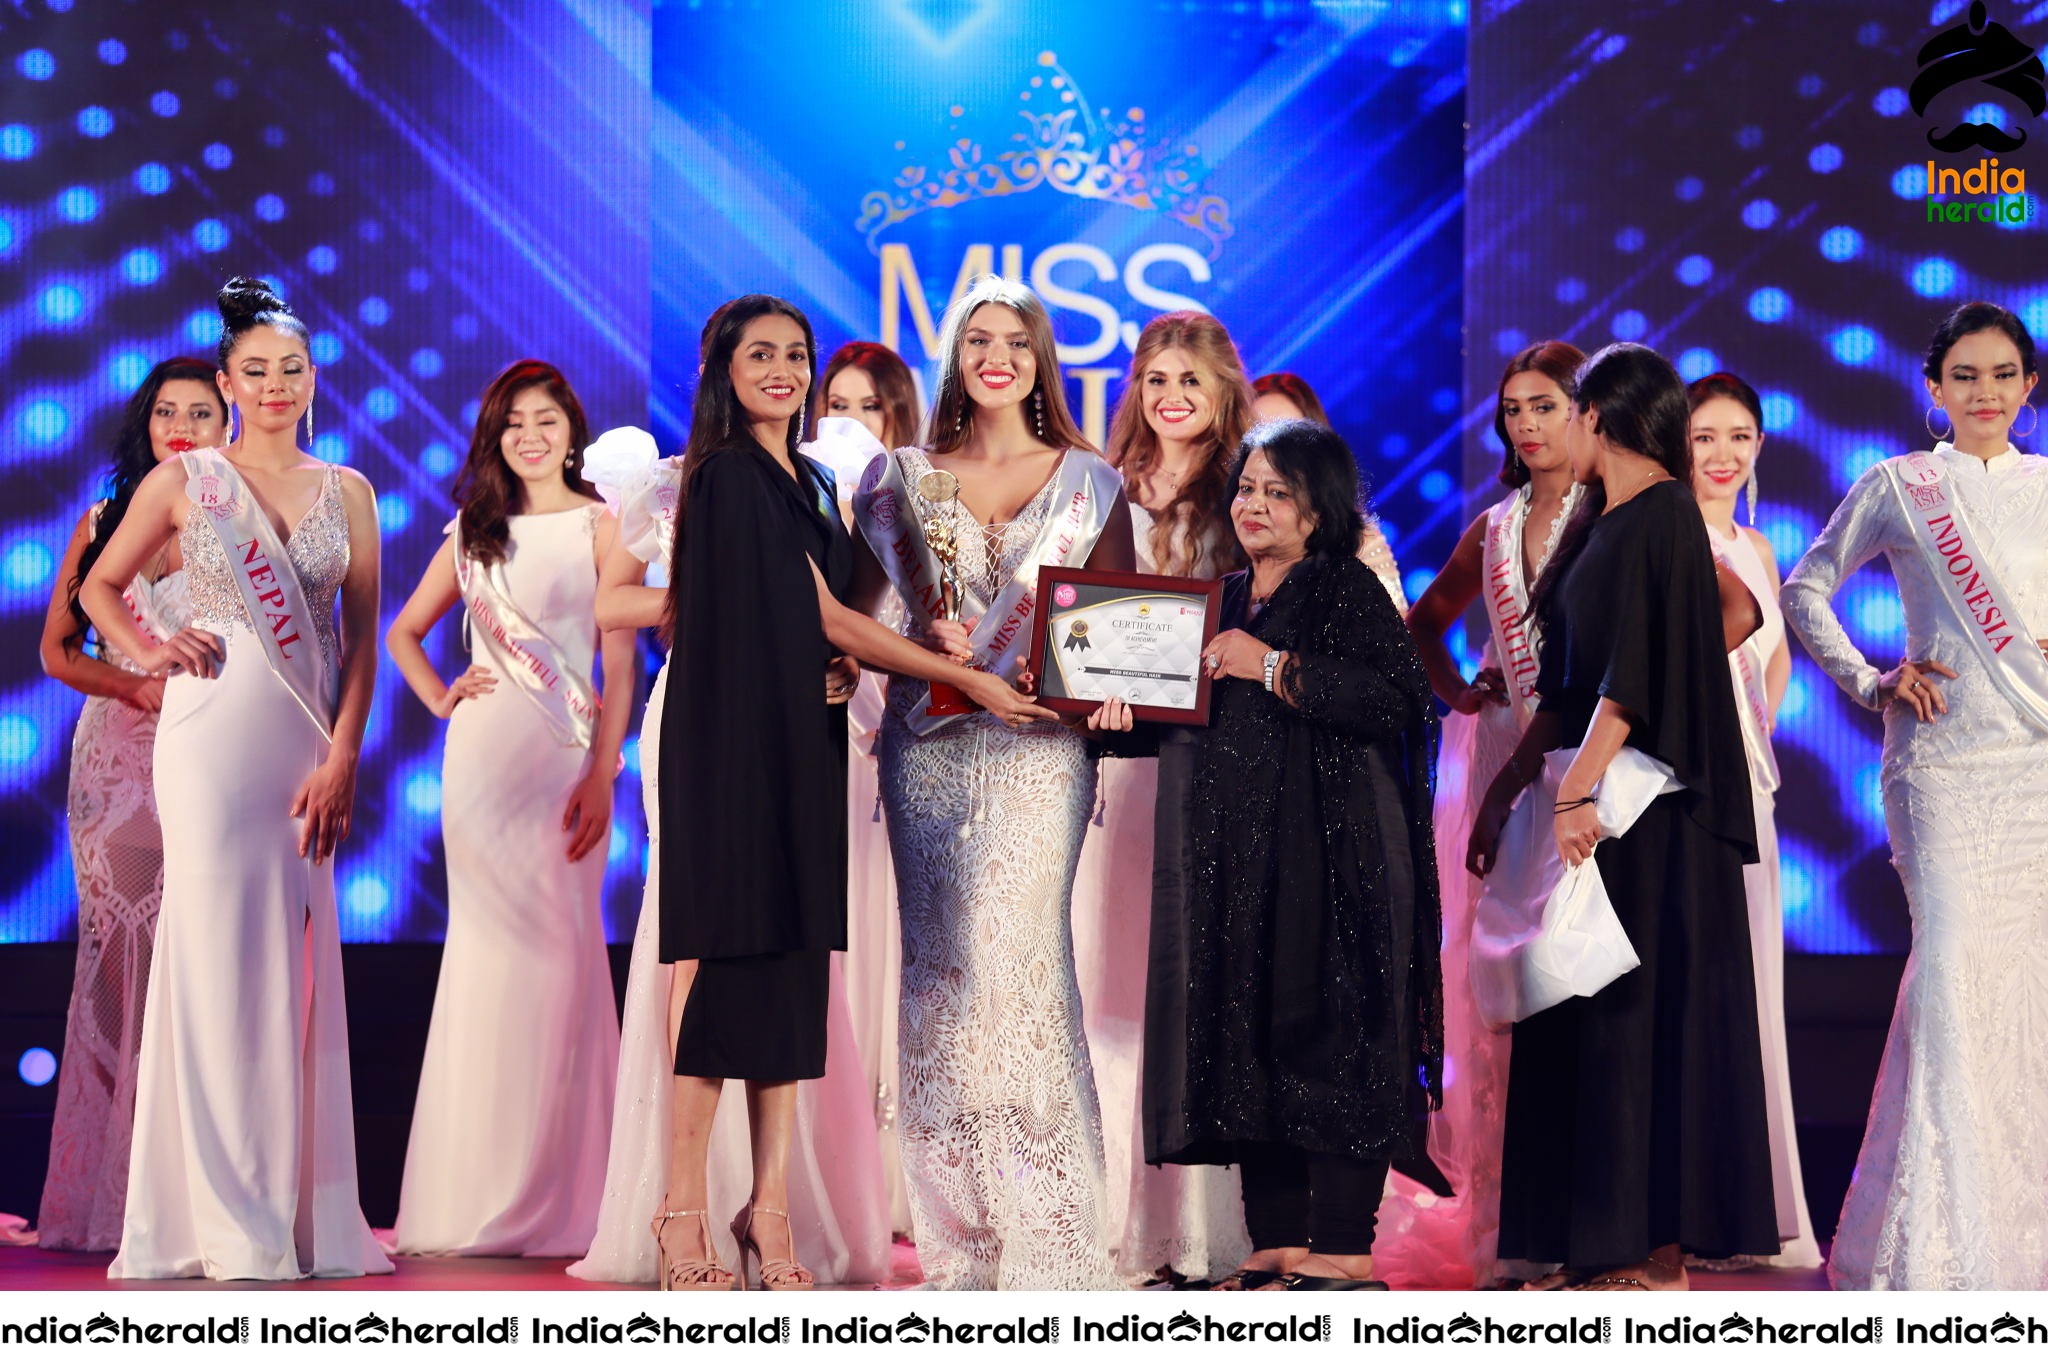 Mahindra And Manappuram Miss Asia Global 2019 Grand Final Fashion Show Set 2